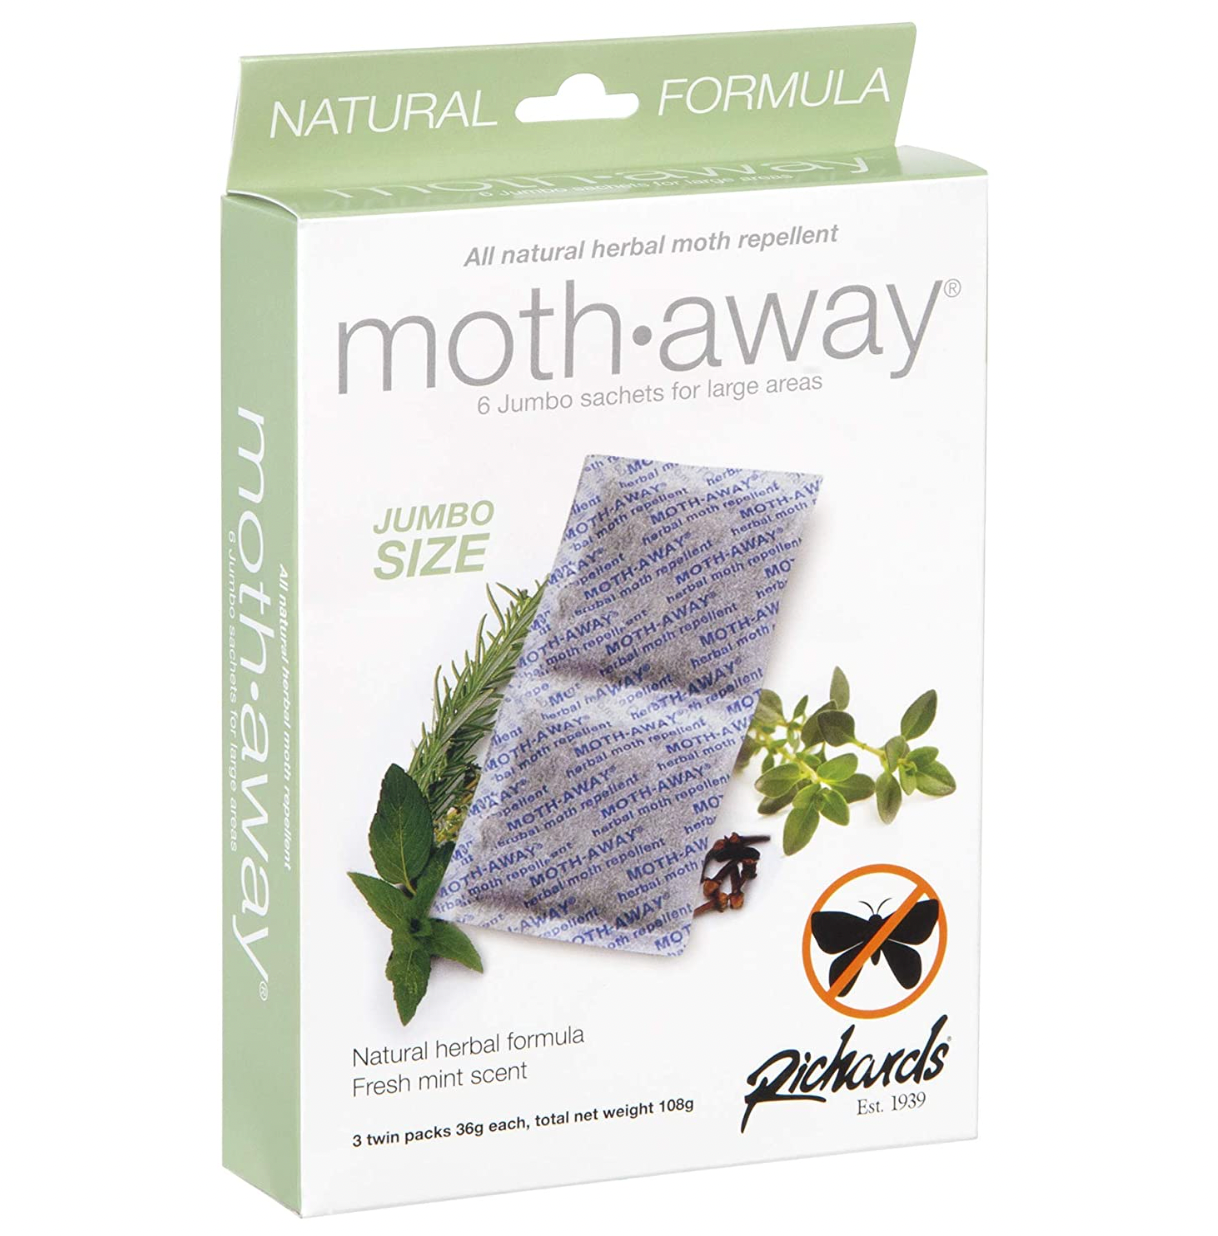 Jumbo Moth Away Herbal Moth Repellent – 6 Jumbo Sachets